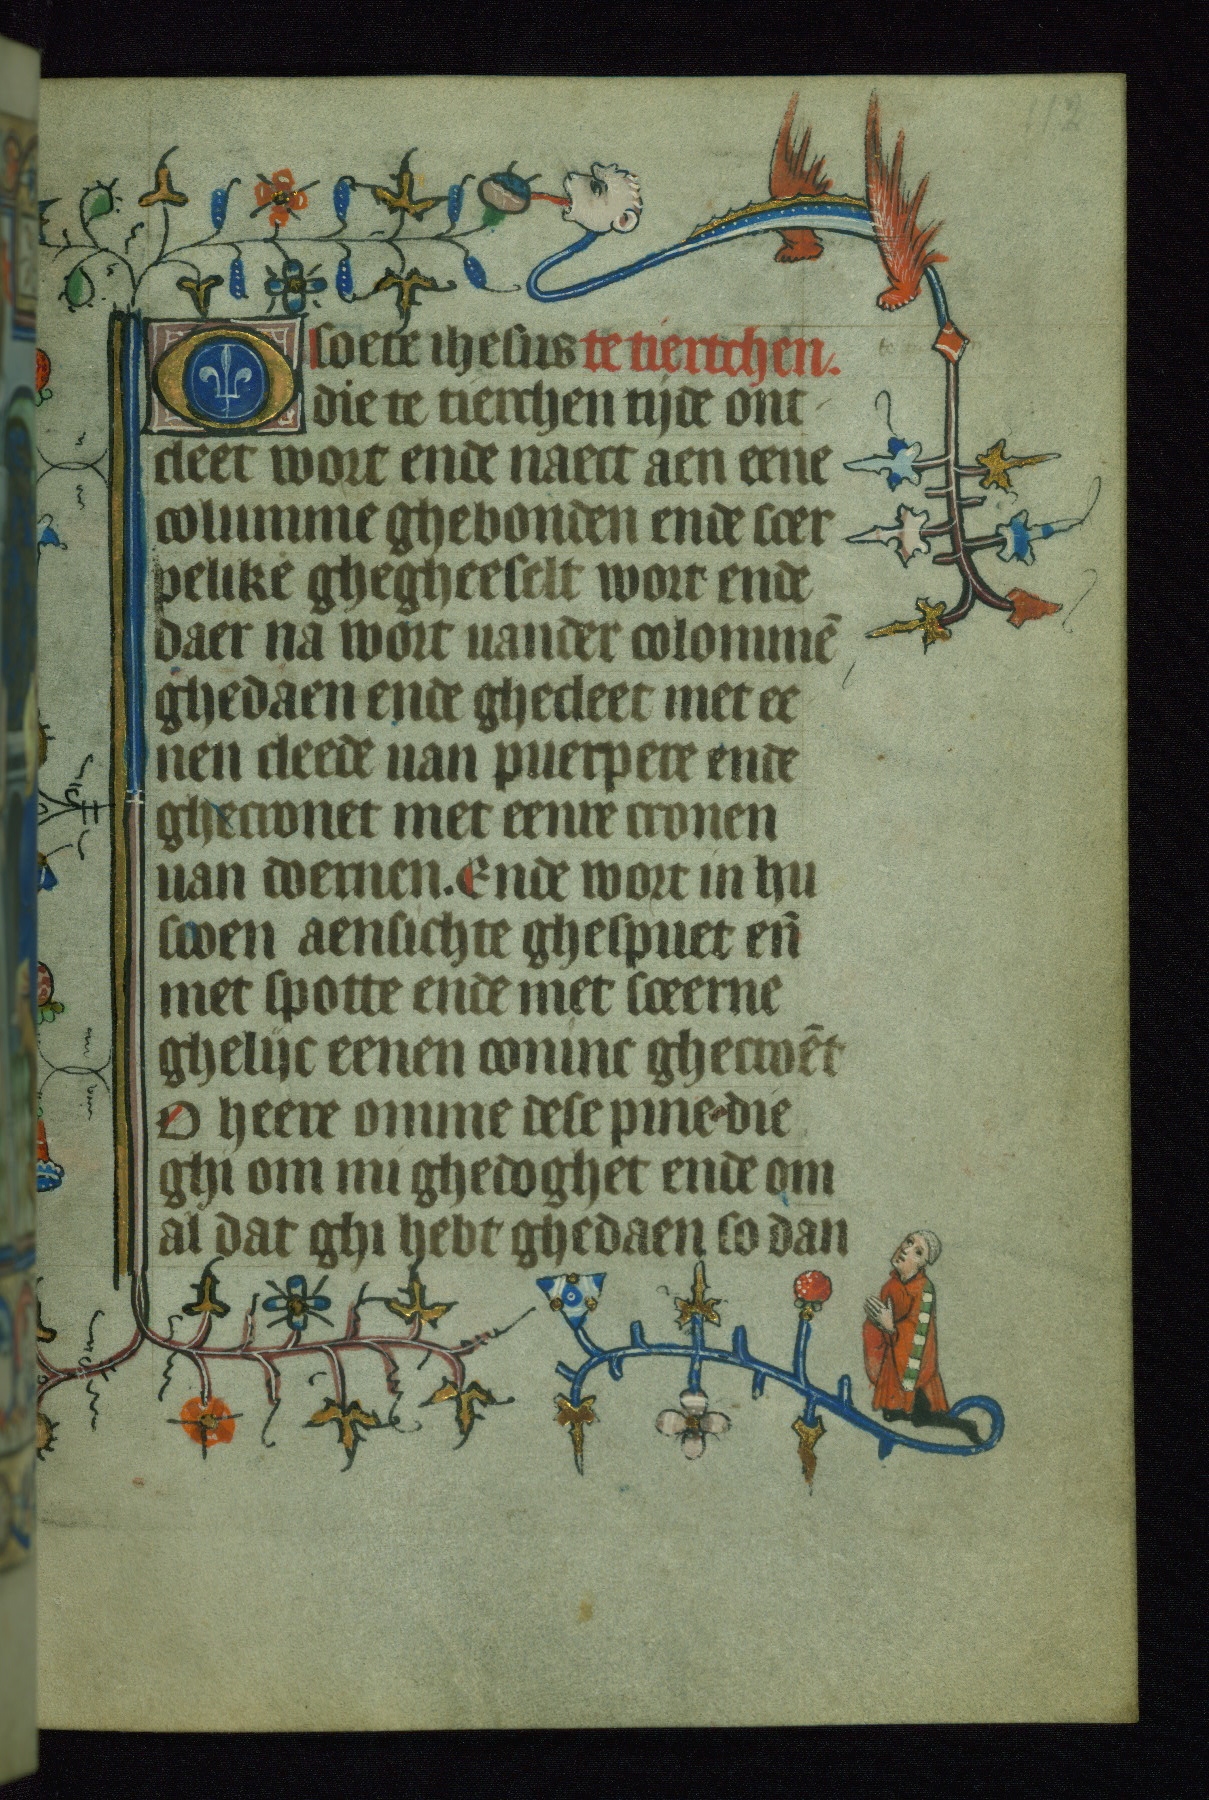 1420‒30 Book of Hours of Daniel RymWalters Ms. W.166 fol 112r